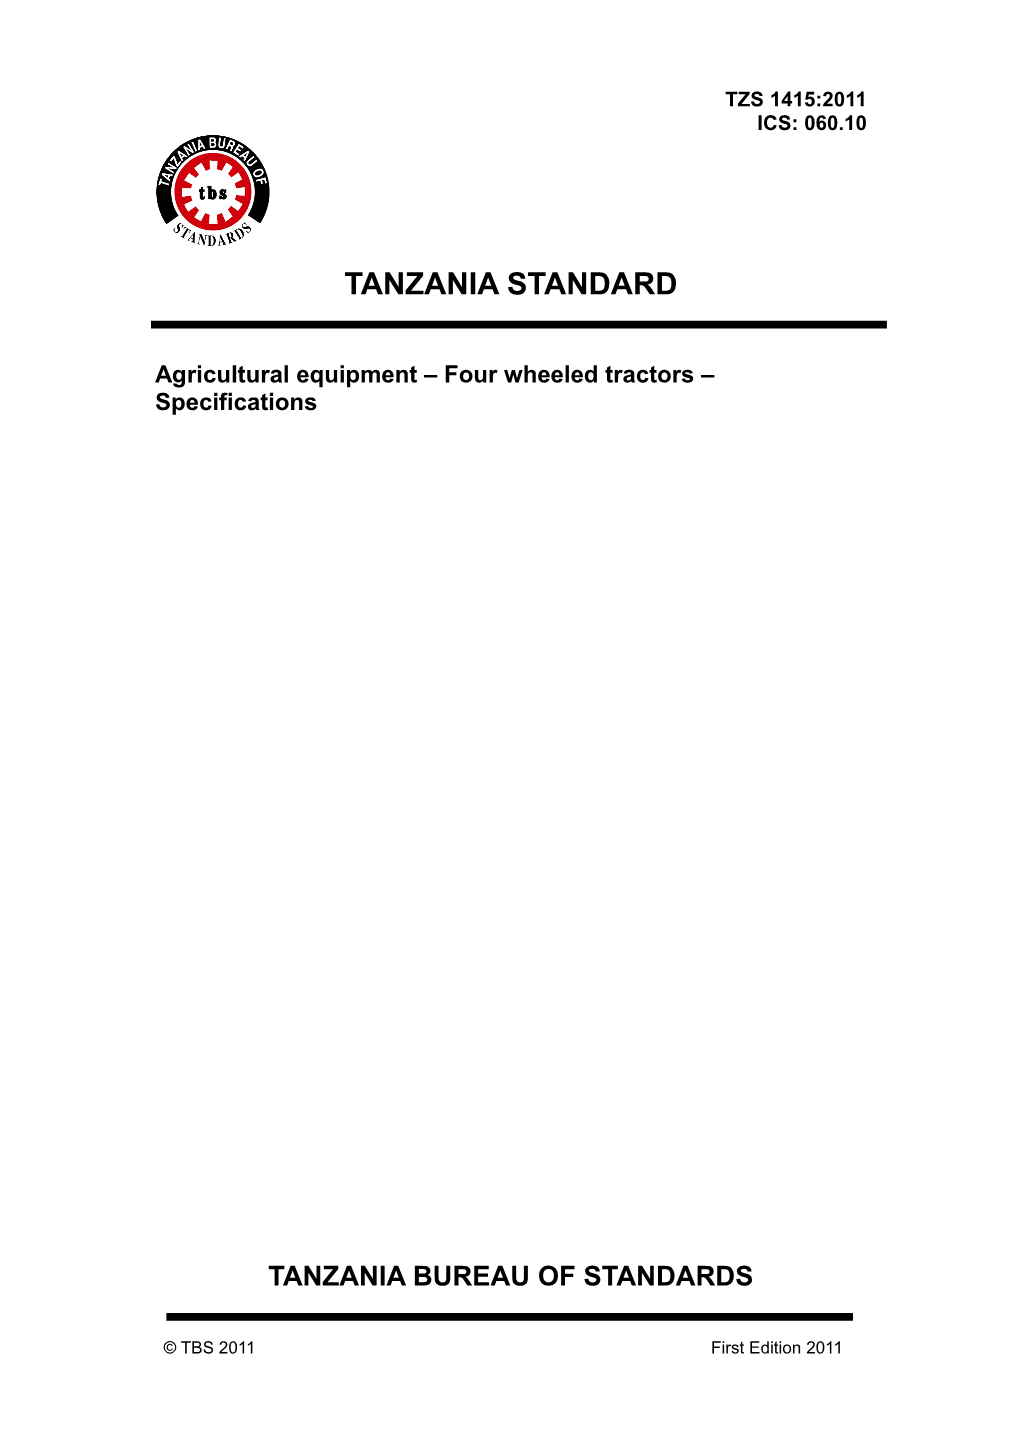 Tanzania Standard